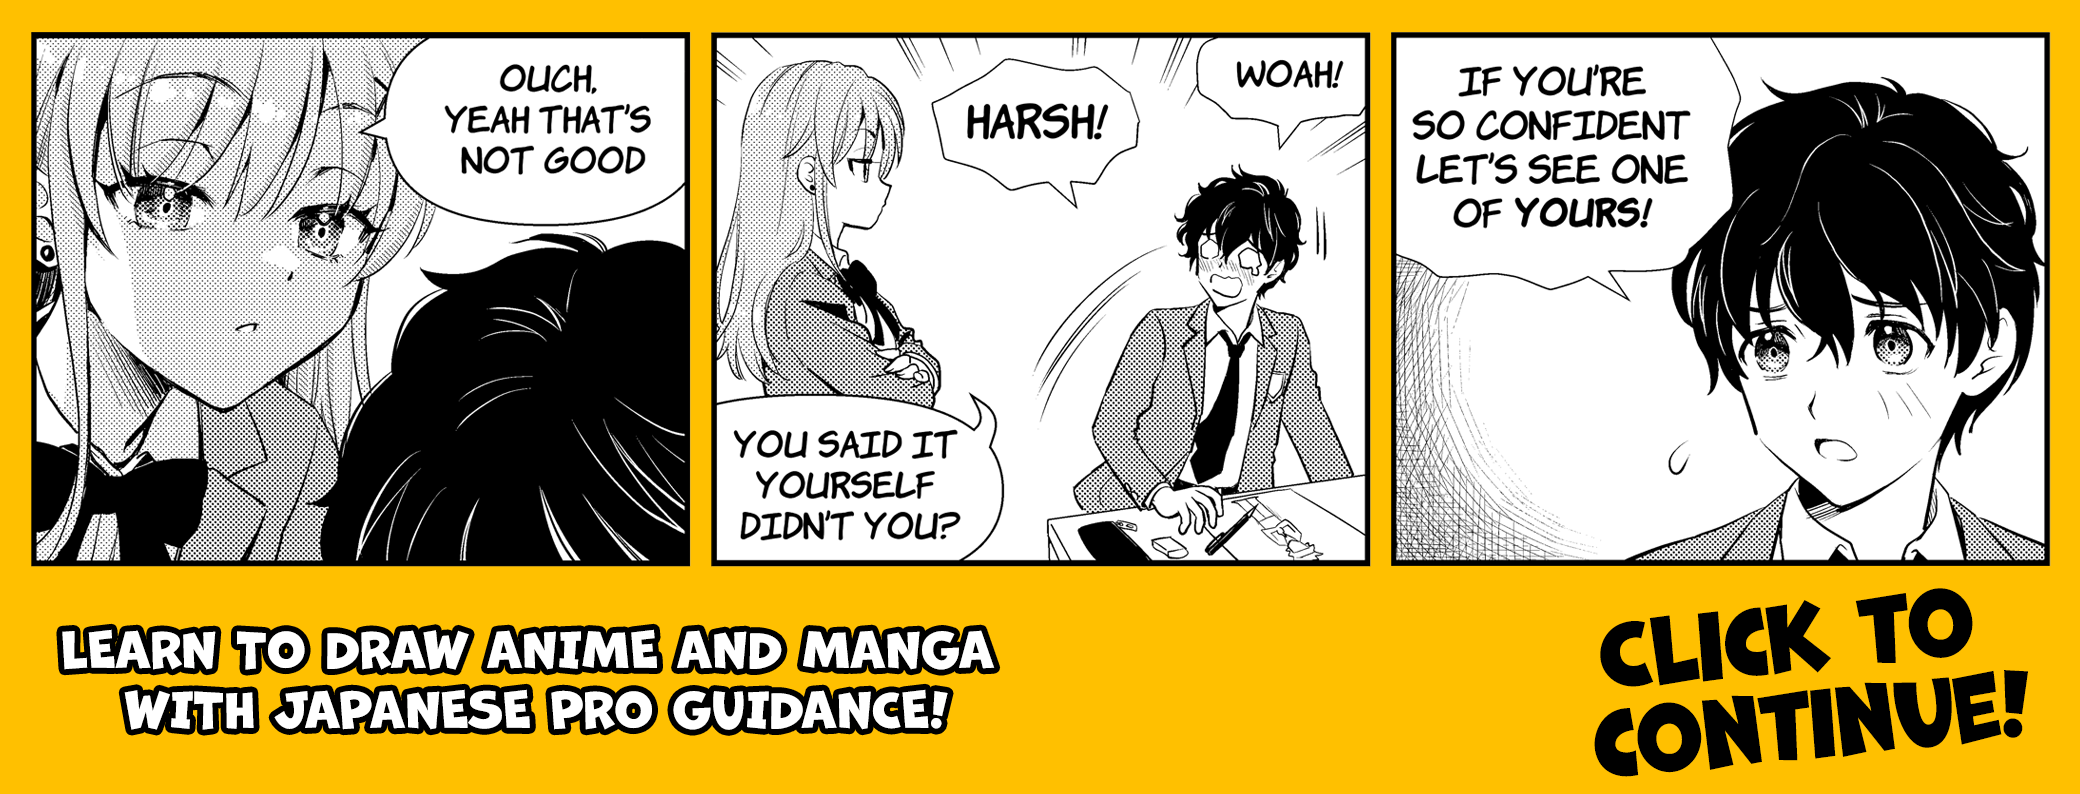 SAVE BIG on Anime/Manga art lessons this BLACK FRIDAY!